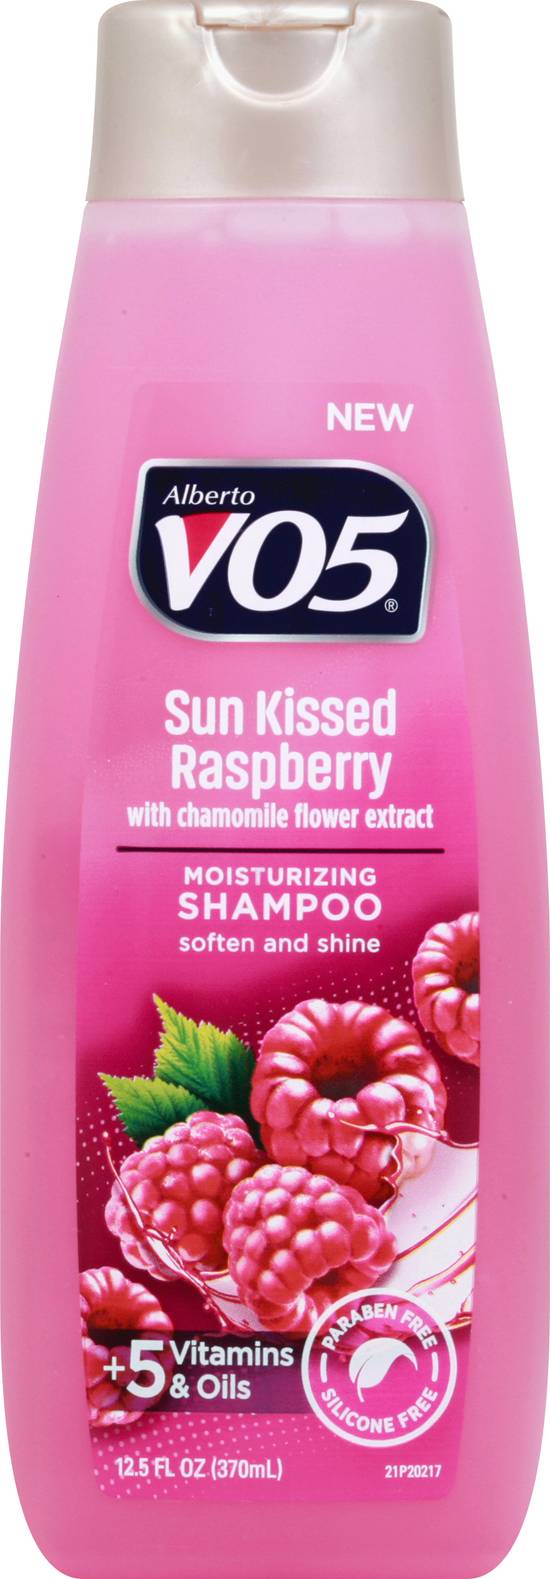 Alberto Vo5 Sun Kissed Raspberry Moisturizing Shampoo